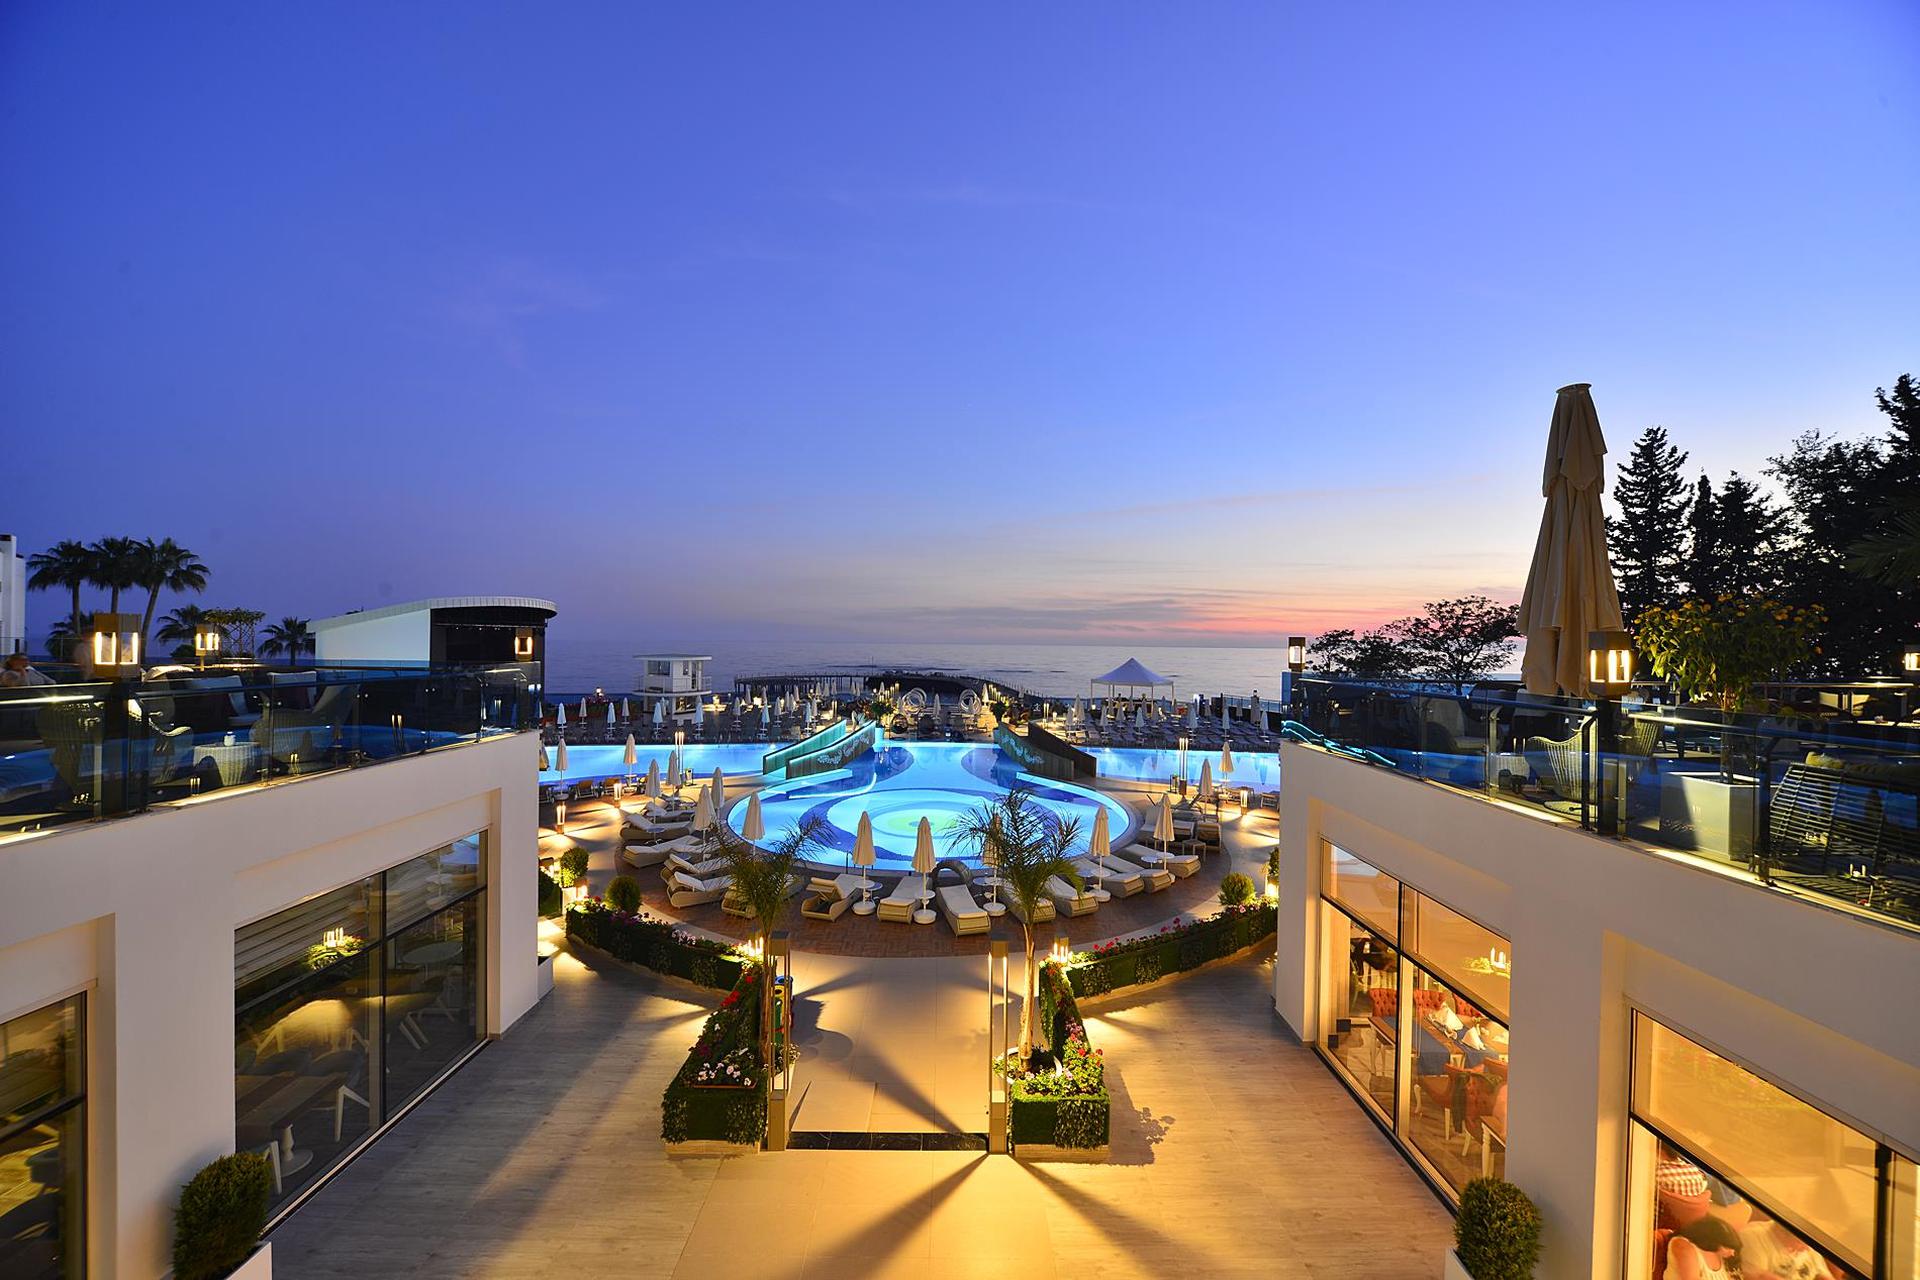 Отель Azura Deluxe Resort &Spa. Турция, Авсаллар, Азура. Отель Азур Резорт Алания. Отель Азура Делюкс Турция Авсаллар. Azur турция